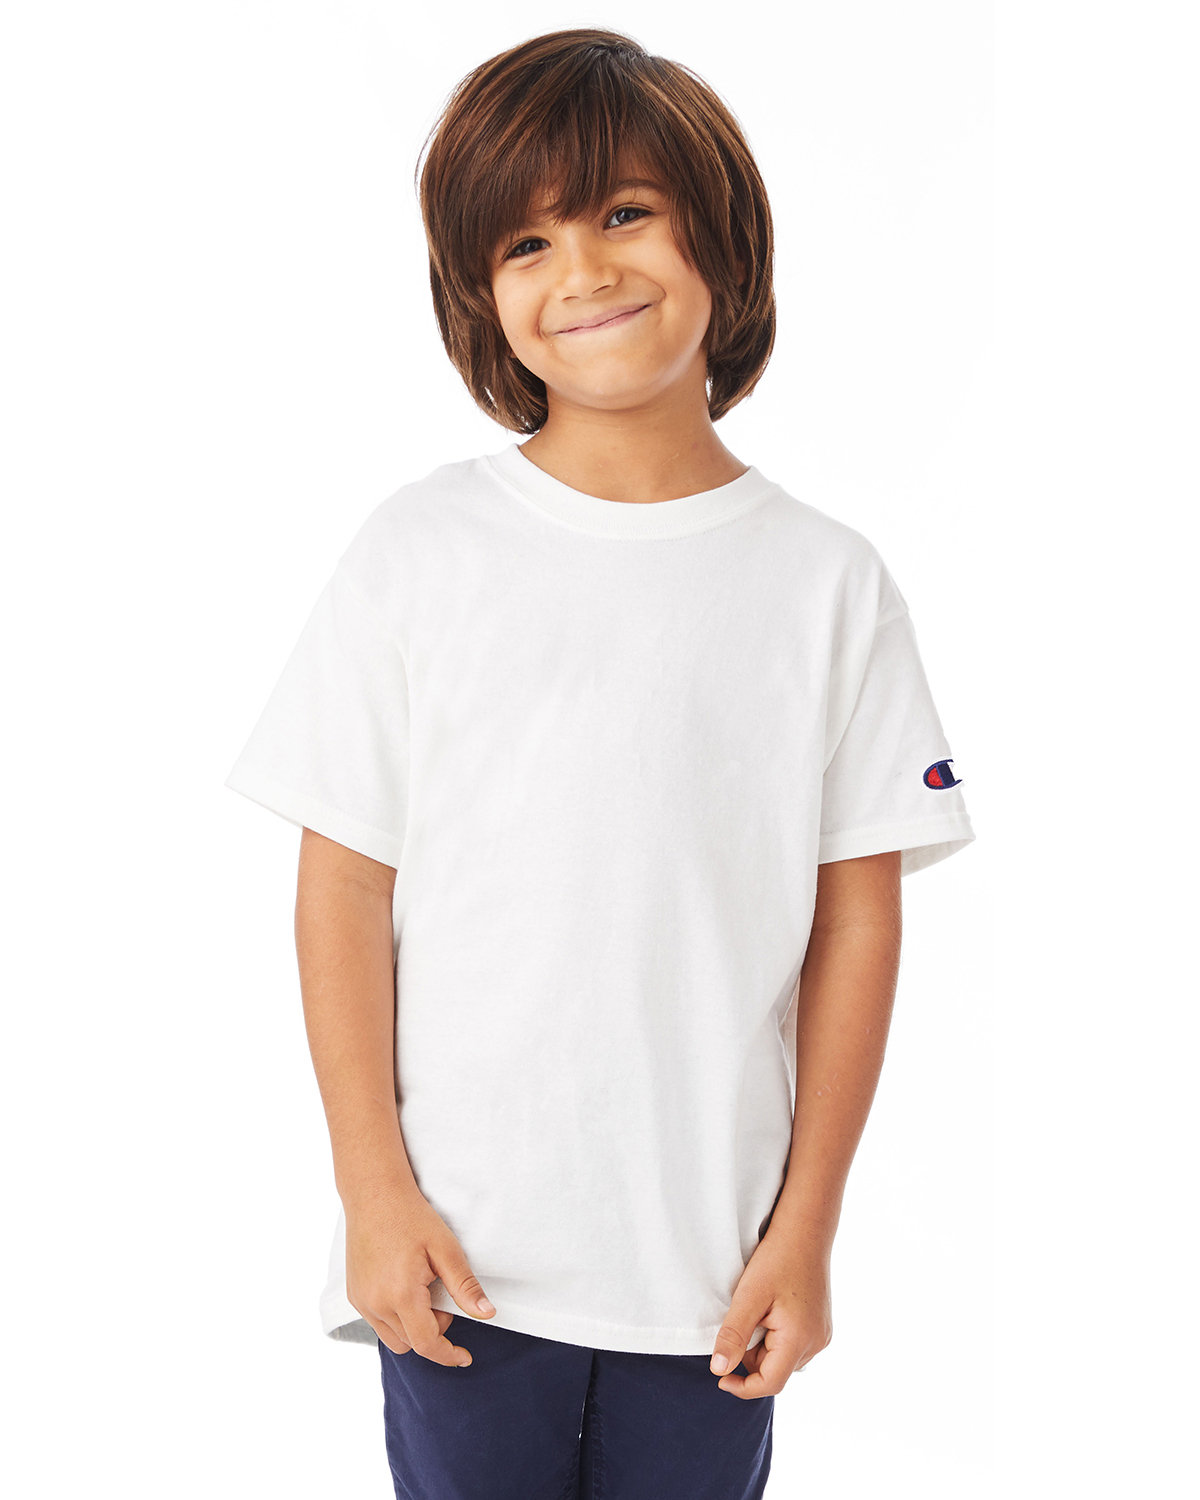 Champion Youth 6.1 oz. Short-Sleeve T-Shirt WHITE 